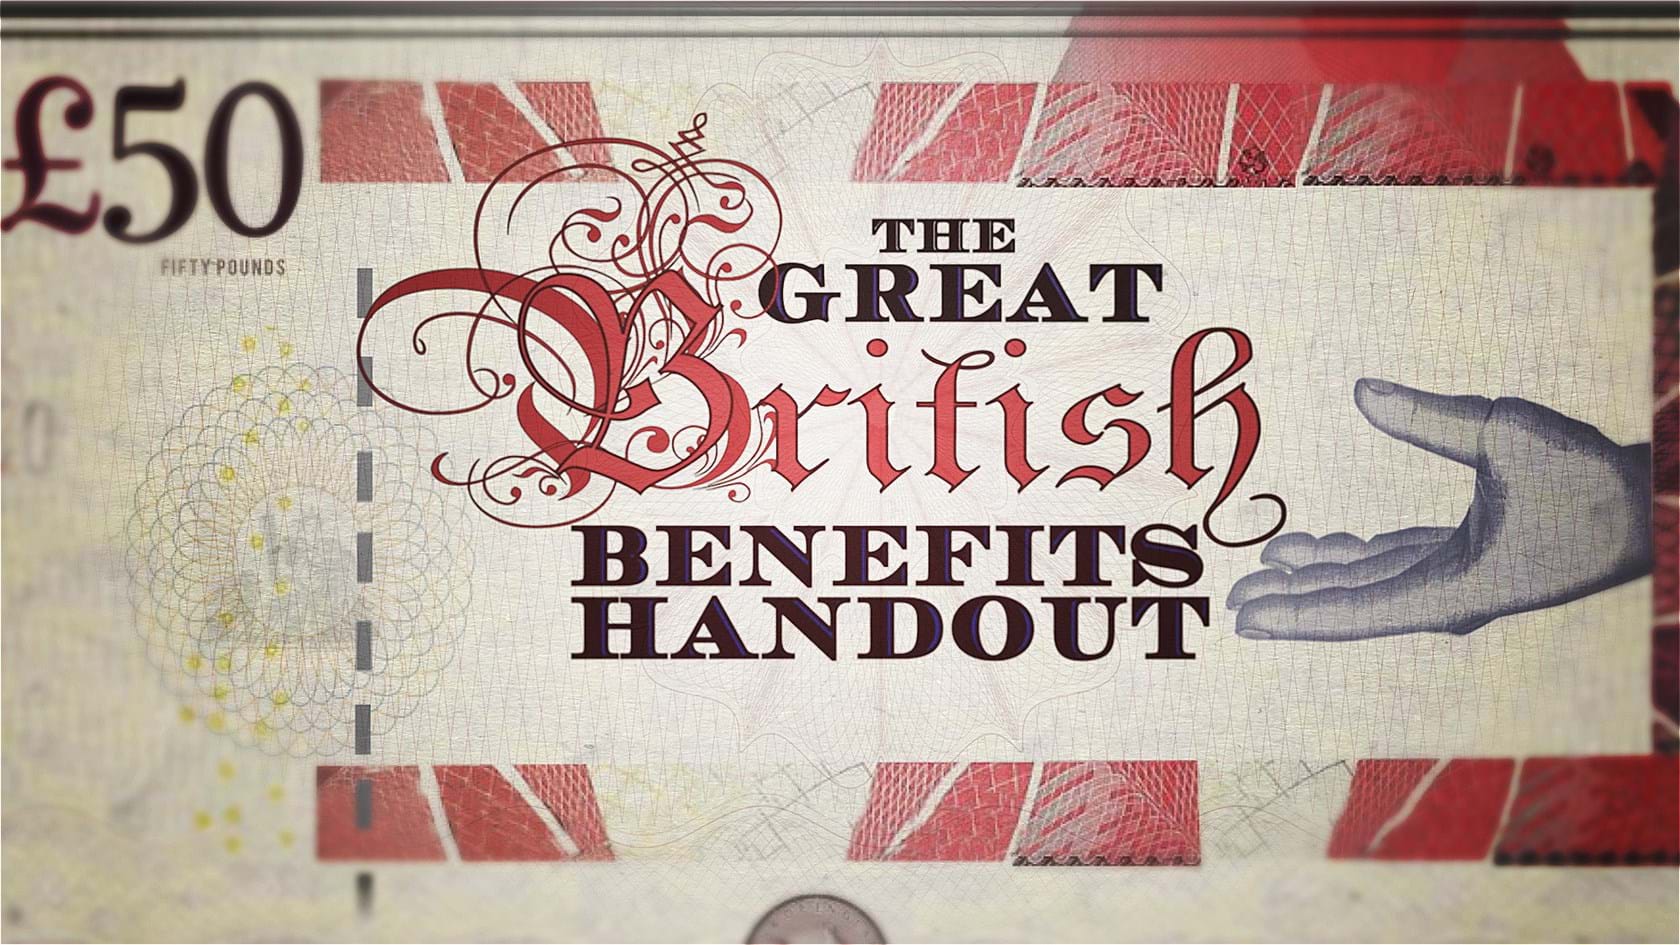 The Great British Benefits Handout